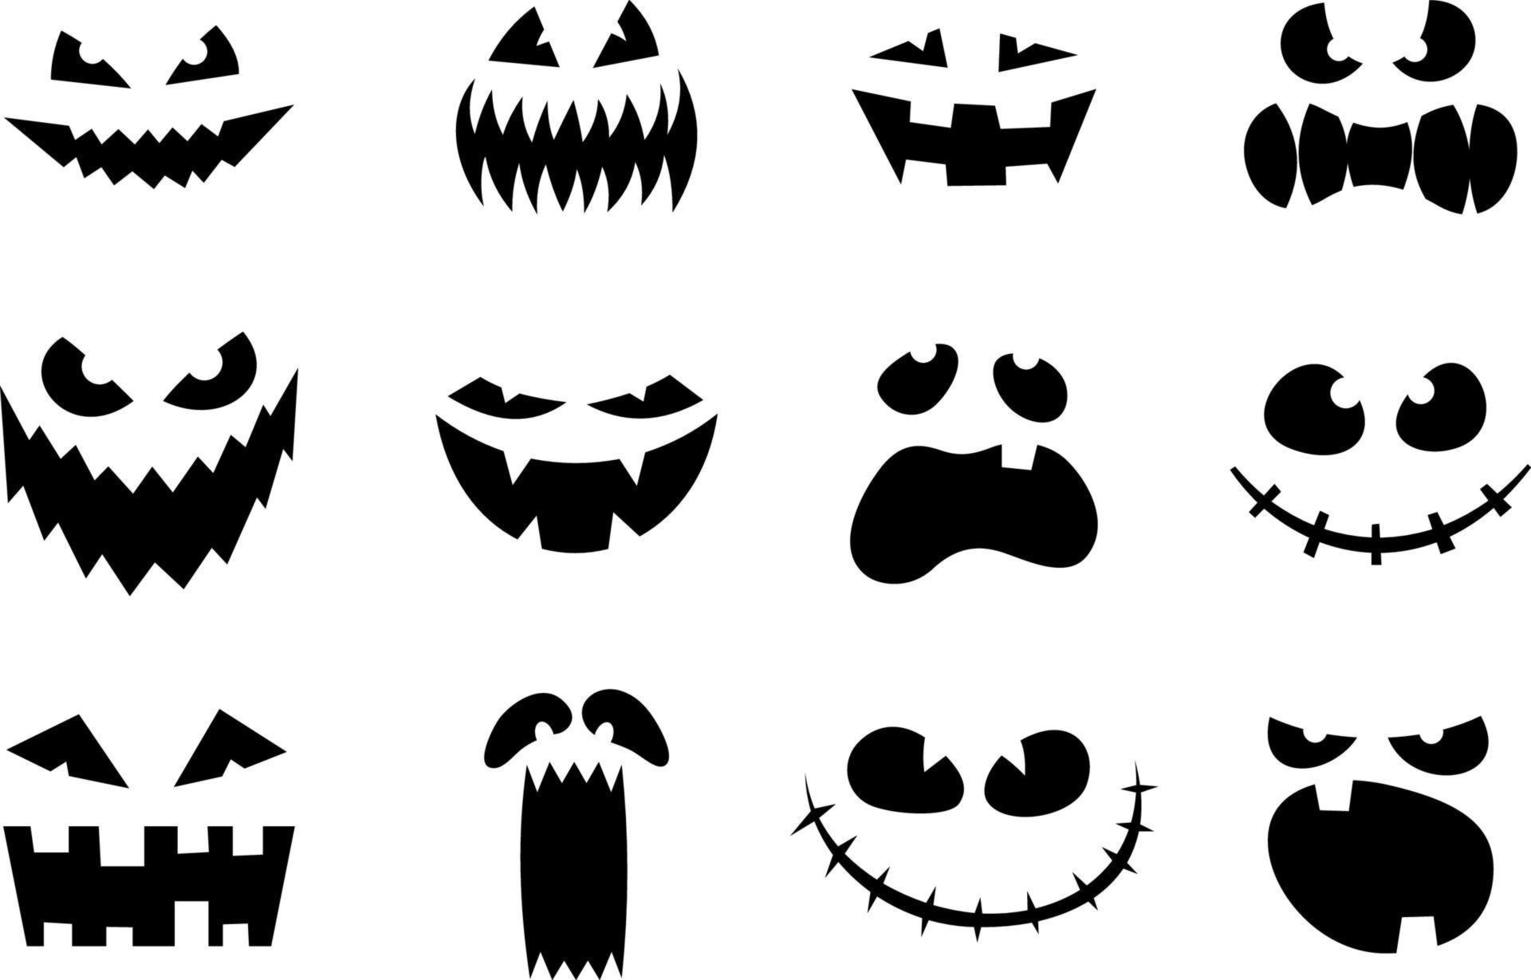 Halloween monster jack lantern pumpkin carved scary face vector